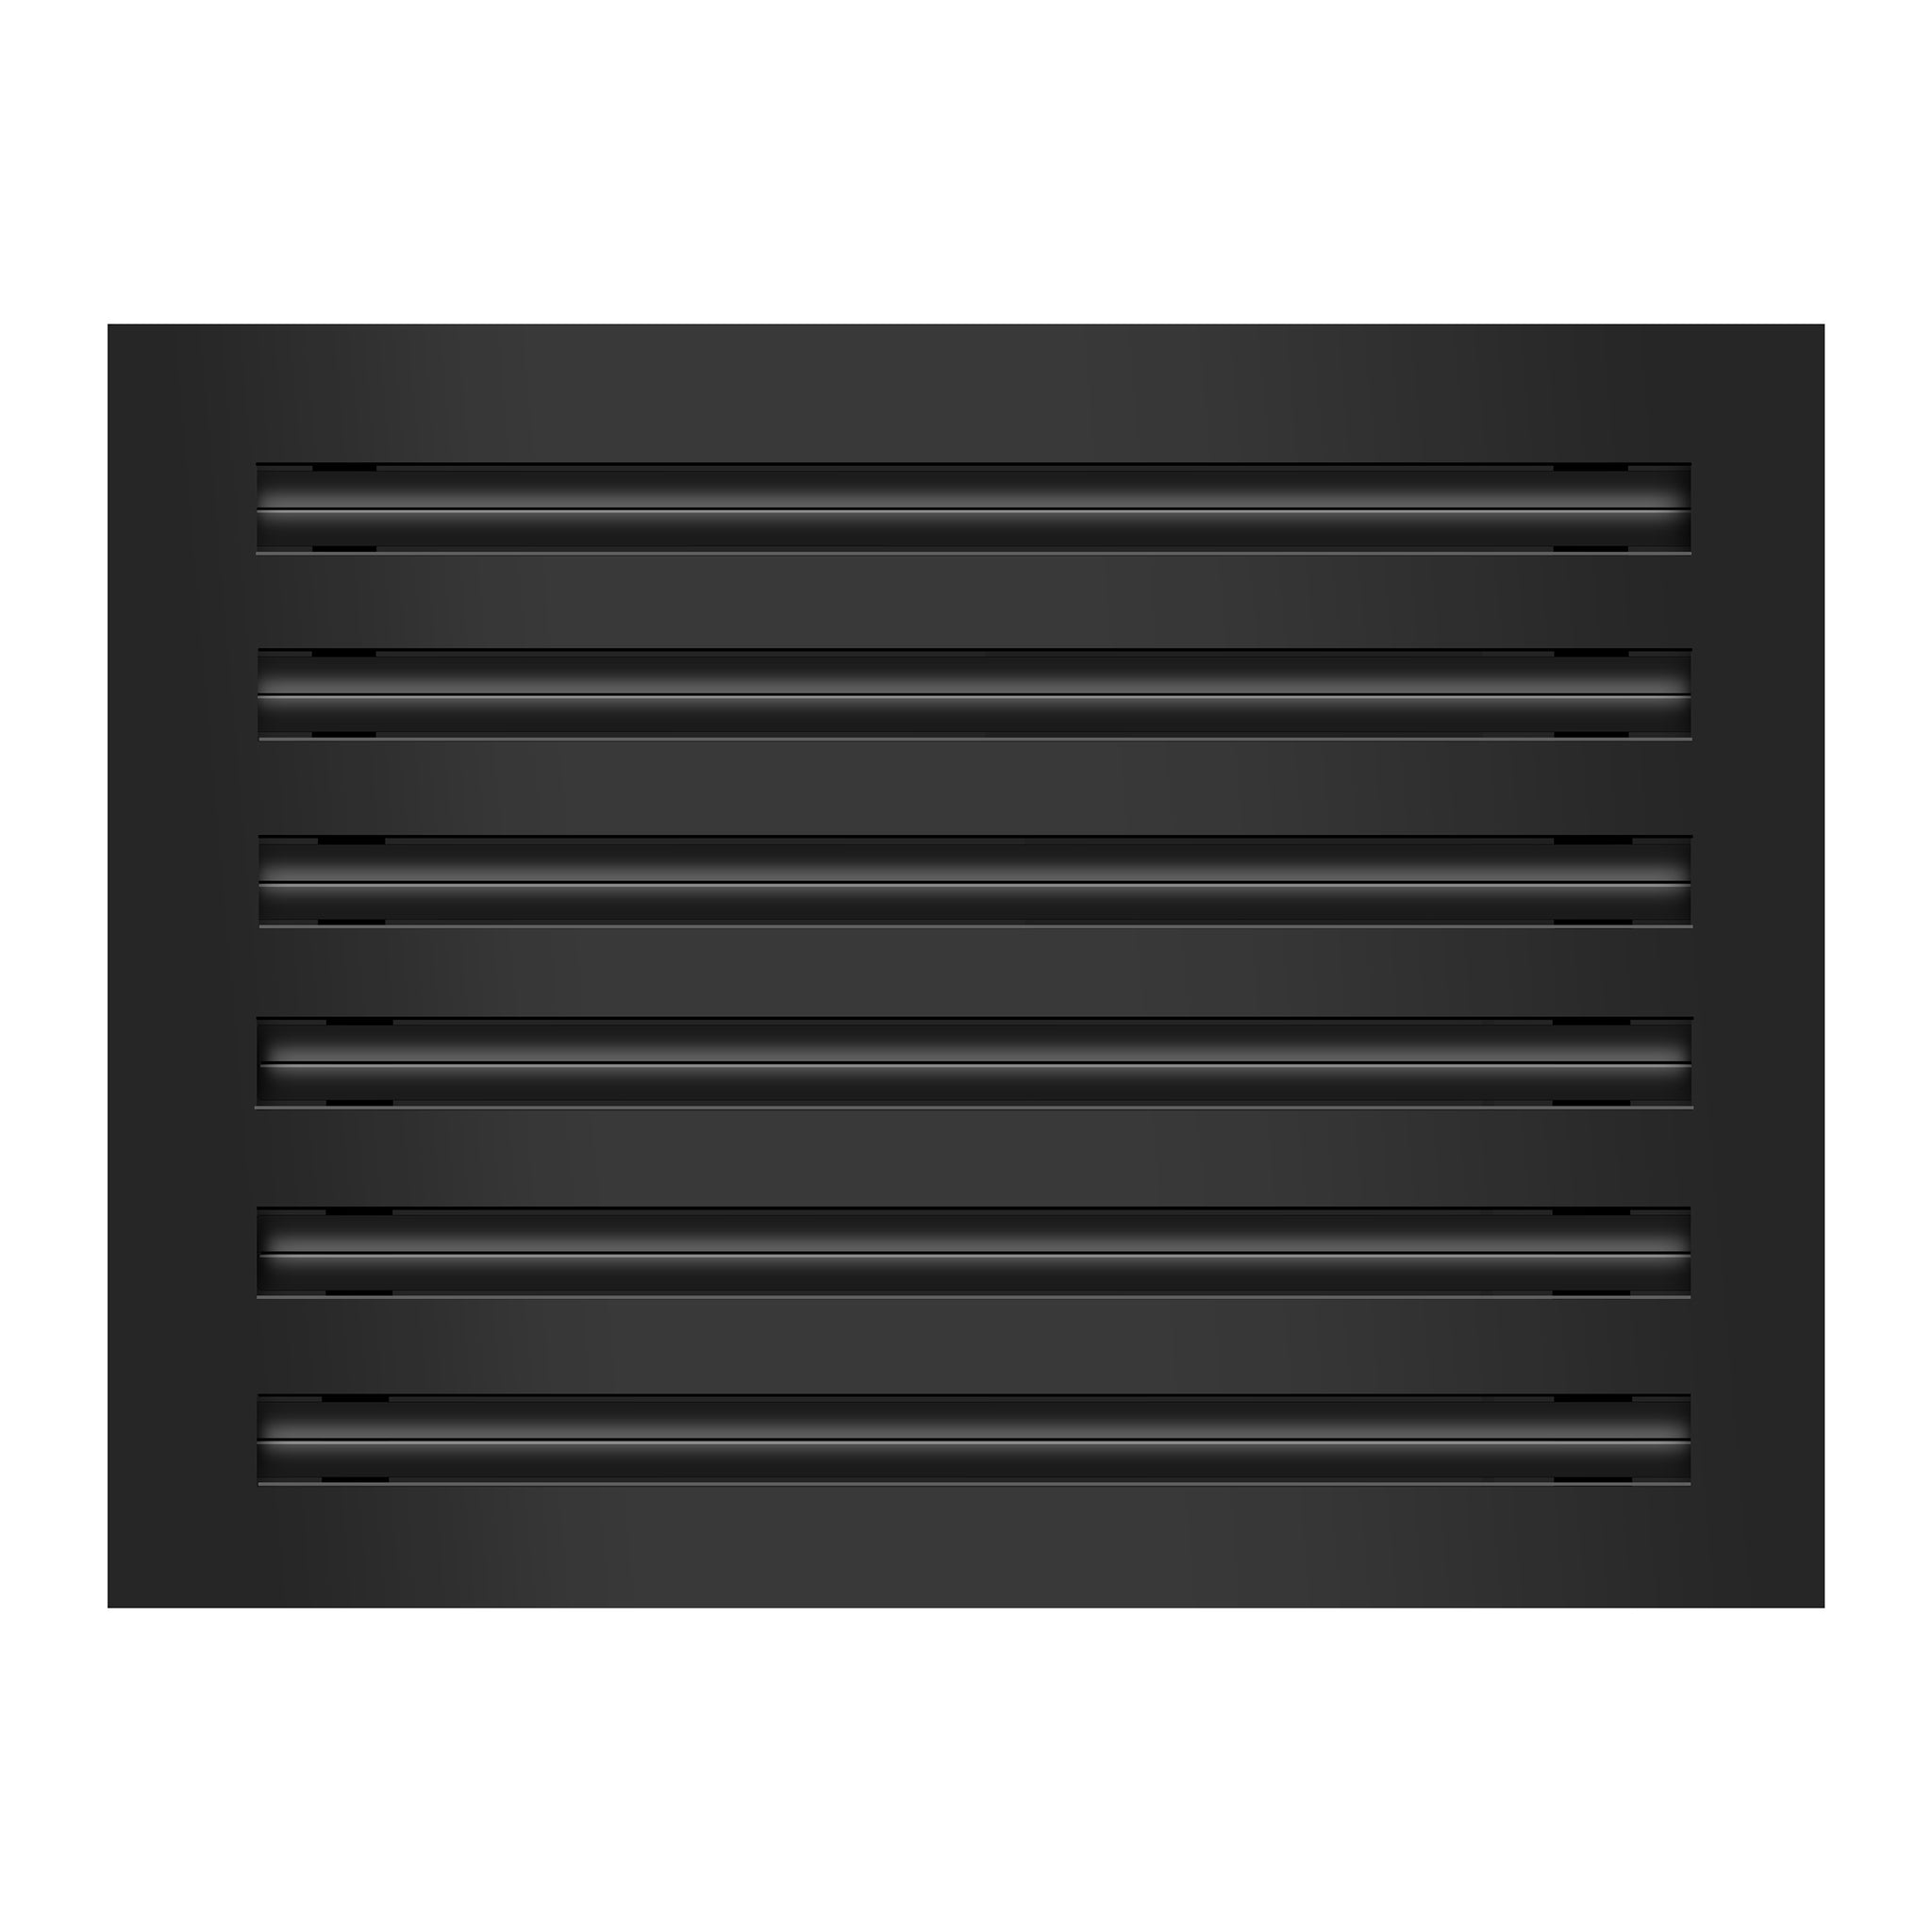 Front View of 16x12 Modern Air Vent Cover Black - 16x12 Standard Linear Slot Diffuser Black - Texas Buildmart